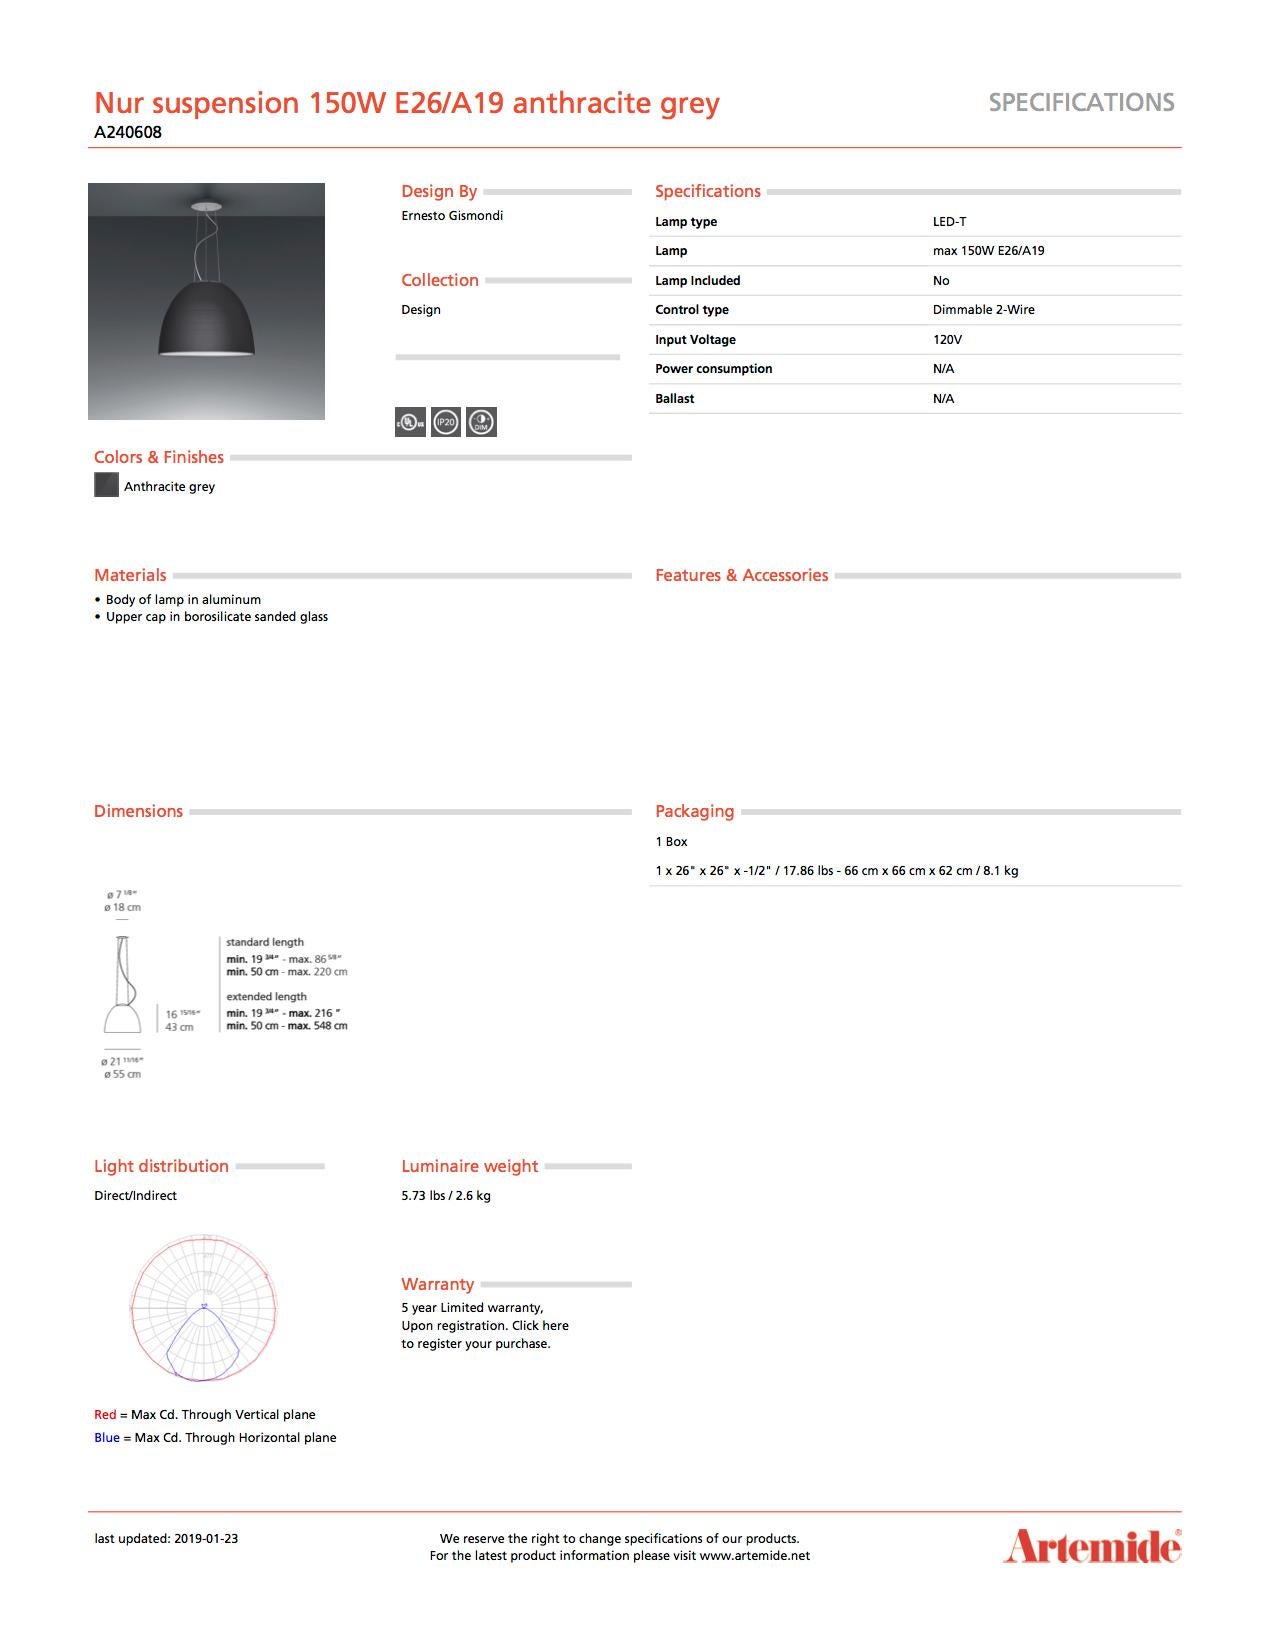 Italian Artemide Nur Suspension Light 150W E26/A19 in Anthracite Grey For Sale